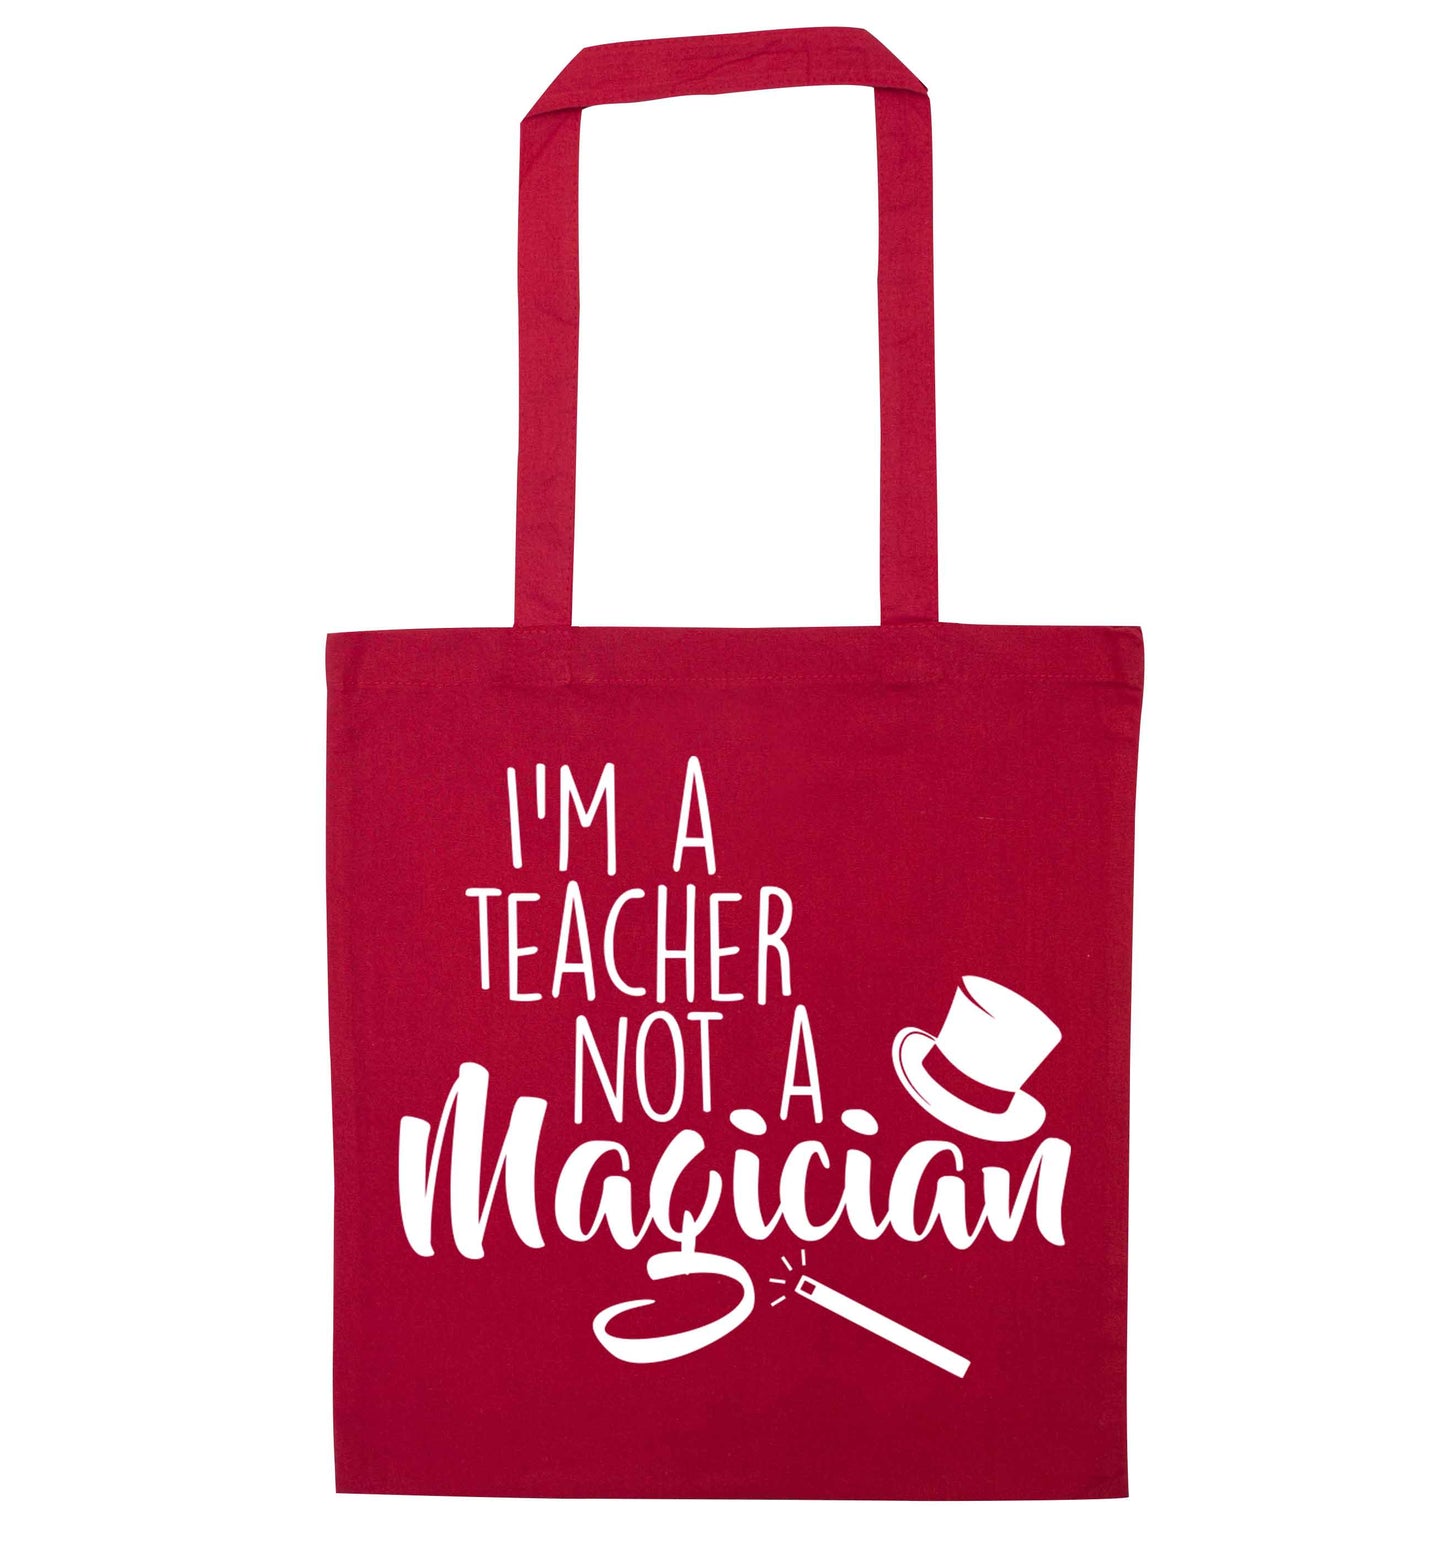 I'm a teacher not a magician red tote bag